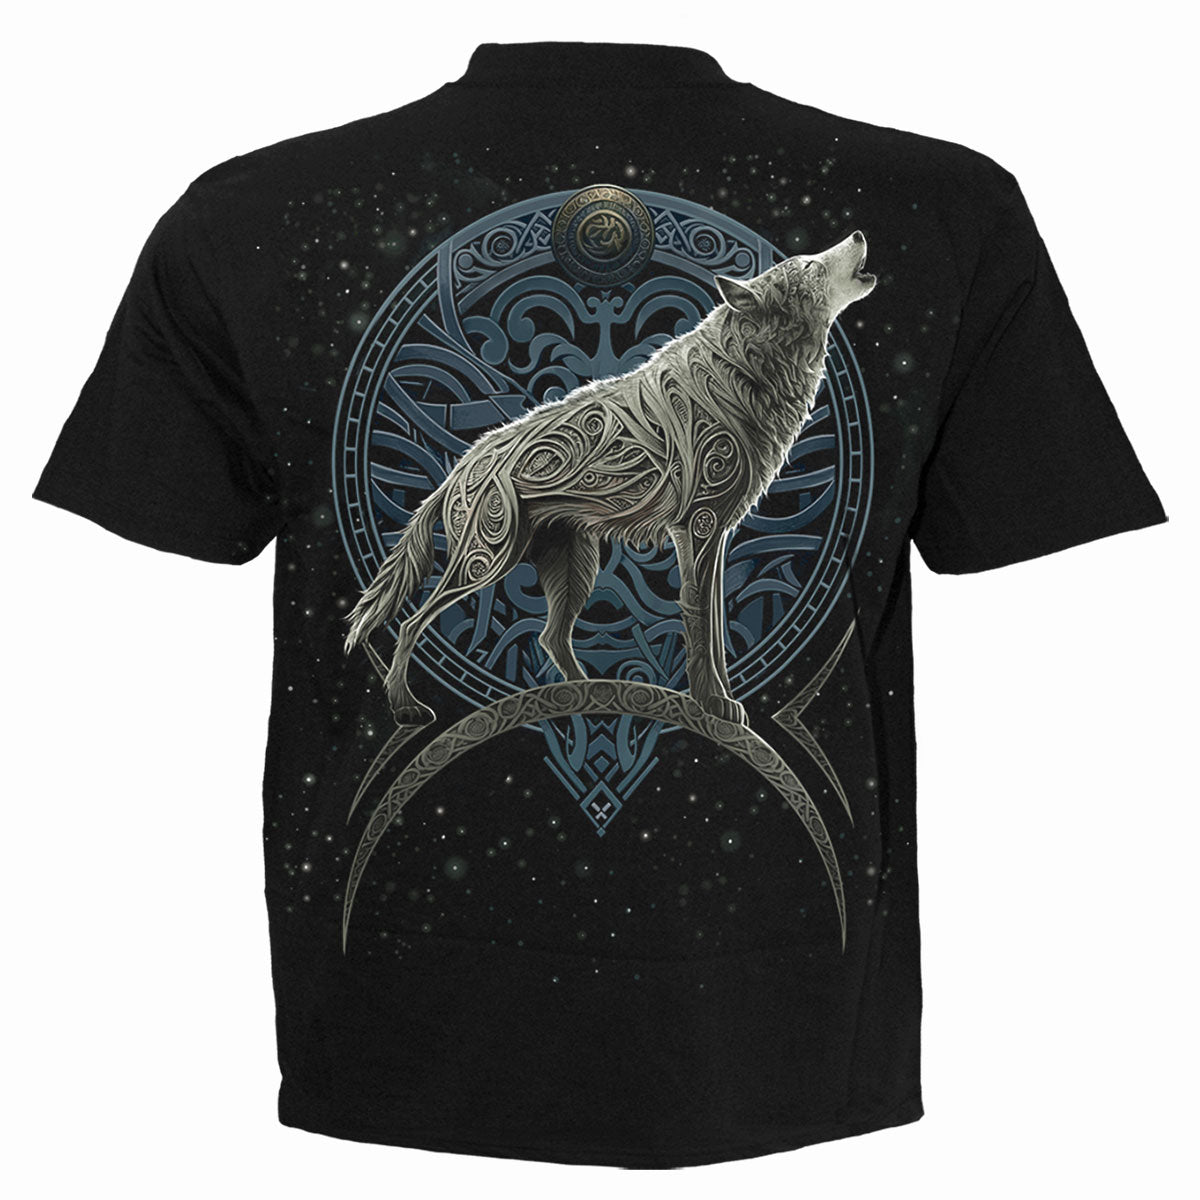 CELTIC WOLF - T-Shirt Black